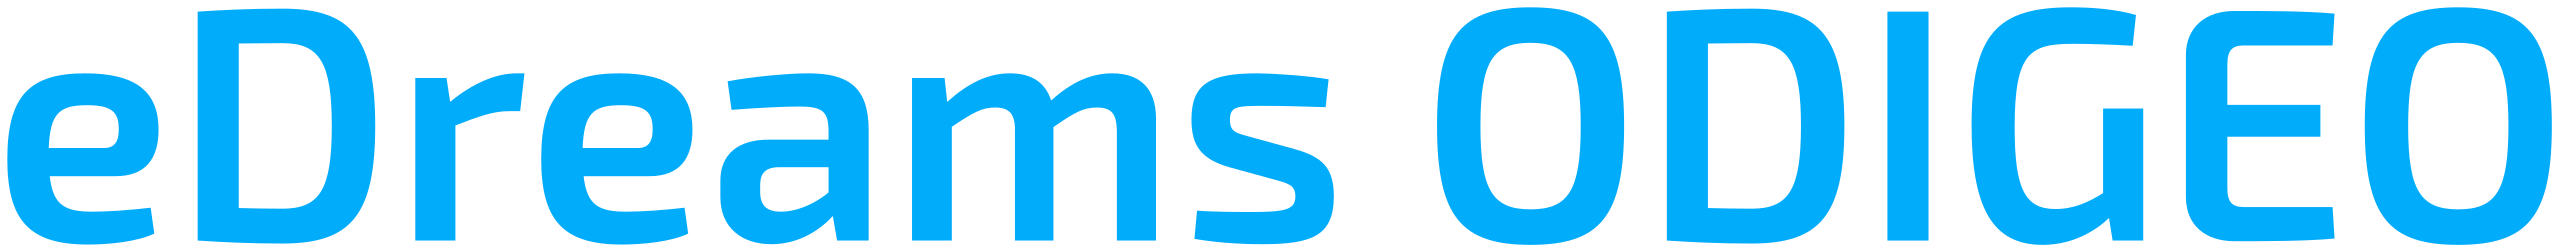 EDreams_ODIGEO_logo.svg-1